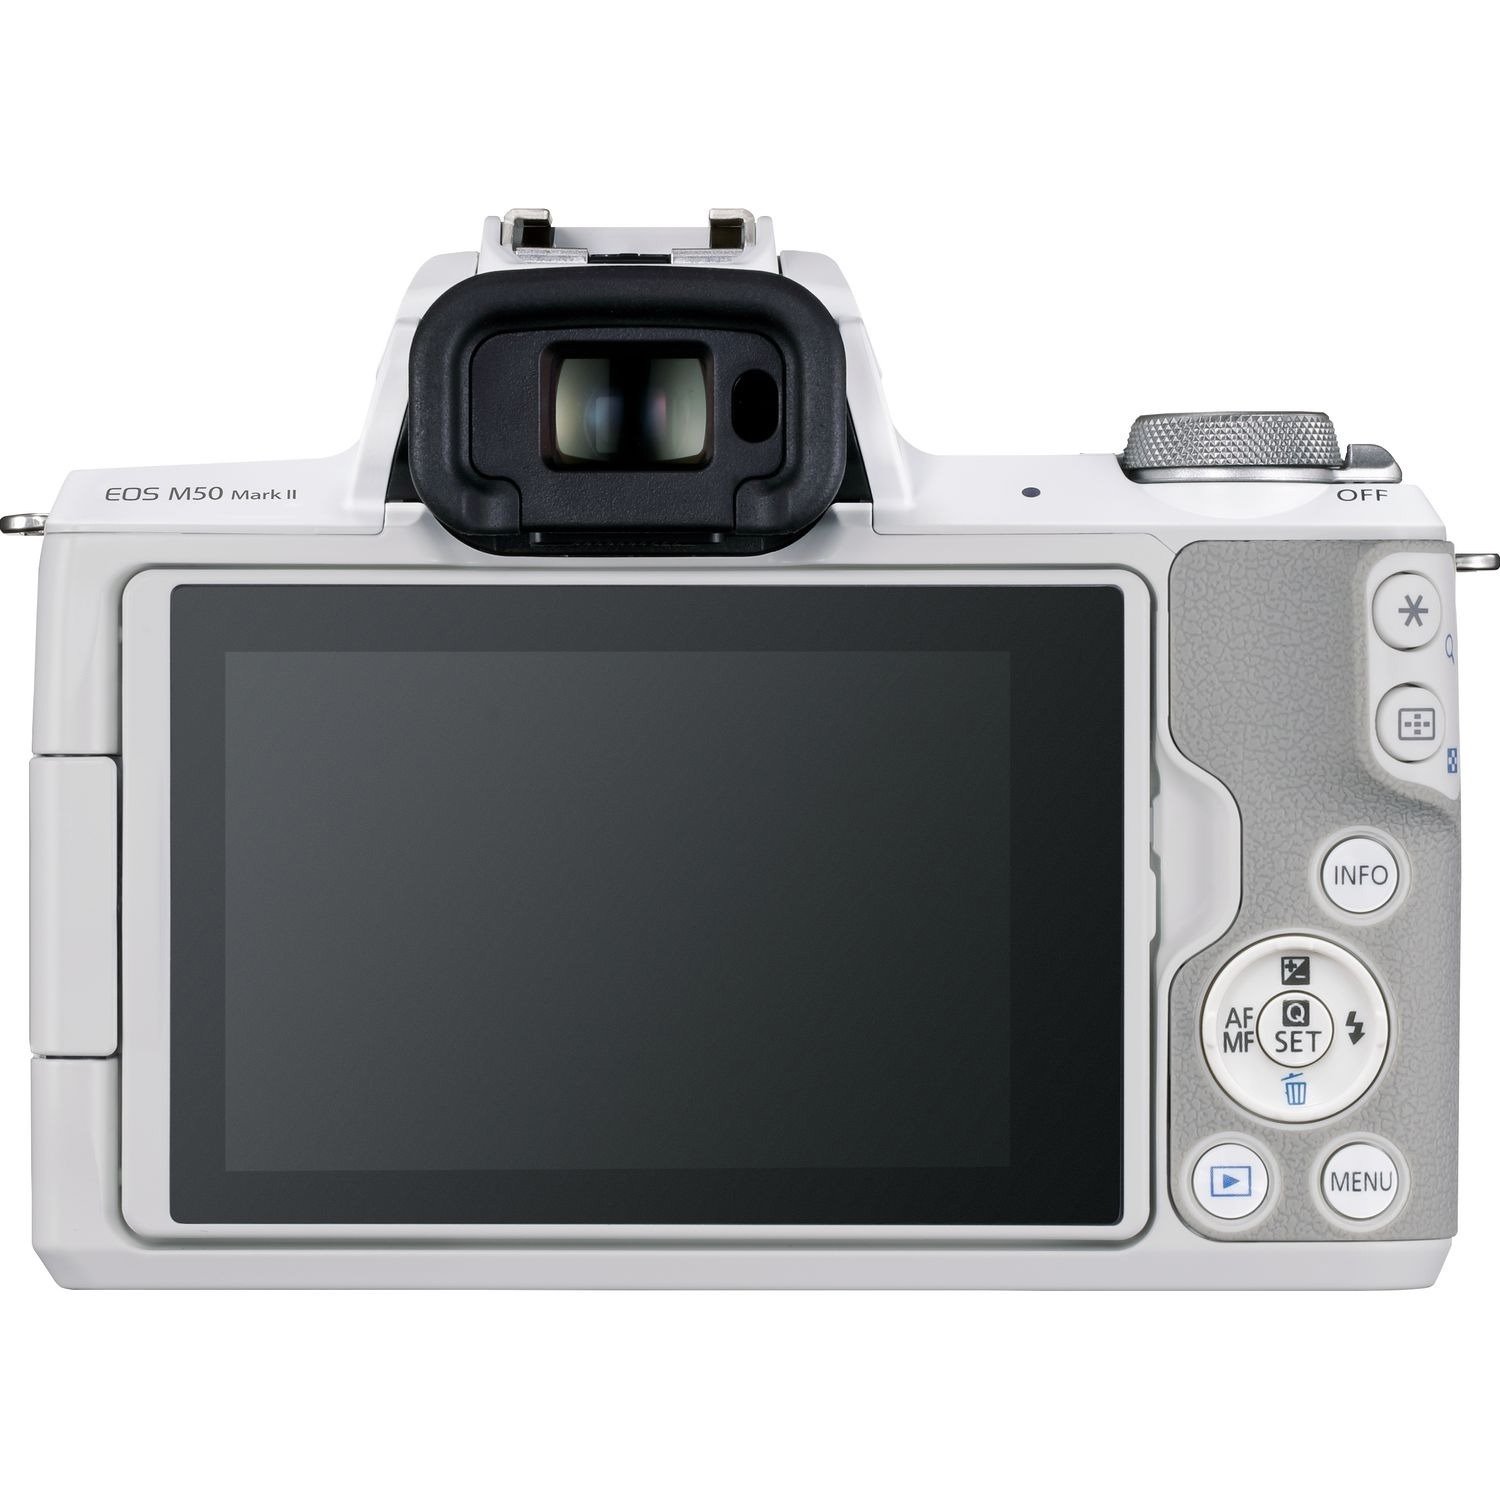 Canon EOS M50 Mark II 24.1 Megapixel Mirrorless Camera with Lens - 0.59" - 1.77" - White